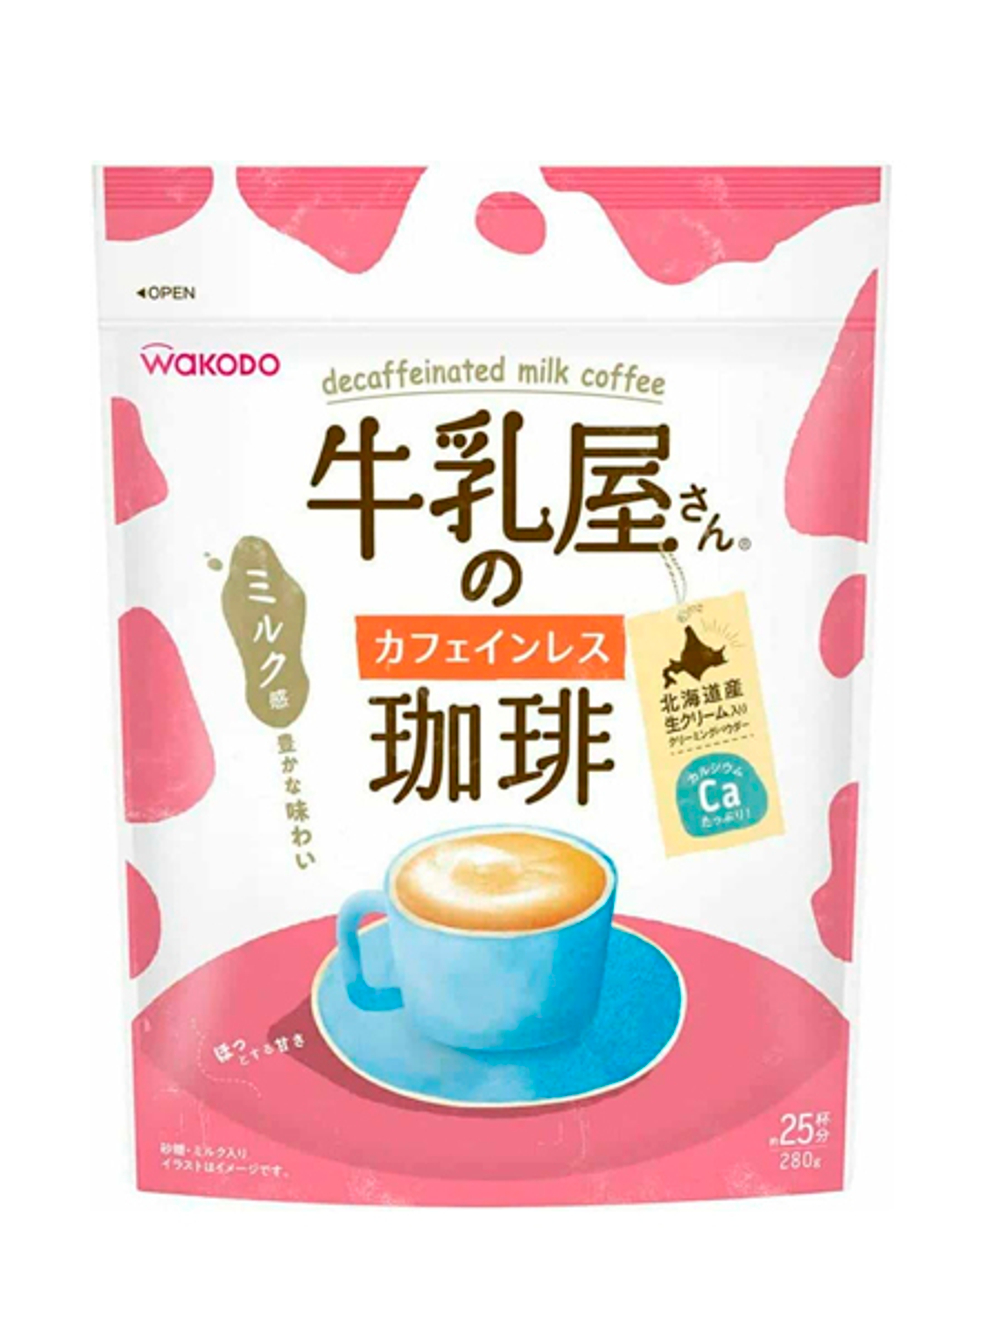 Напиток Wakodo Decaffeinated без кофеина